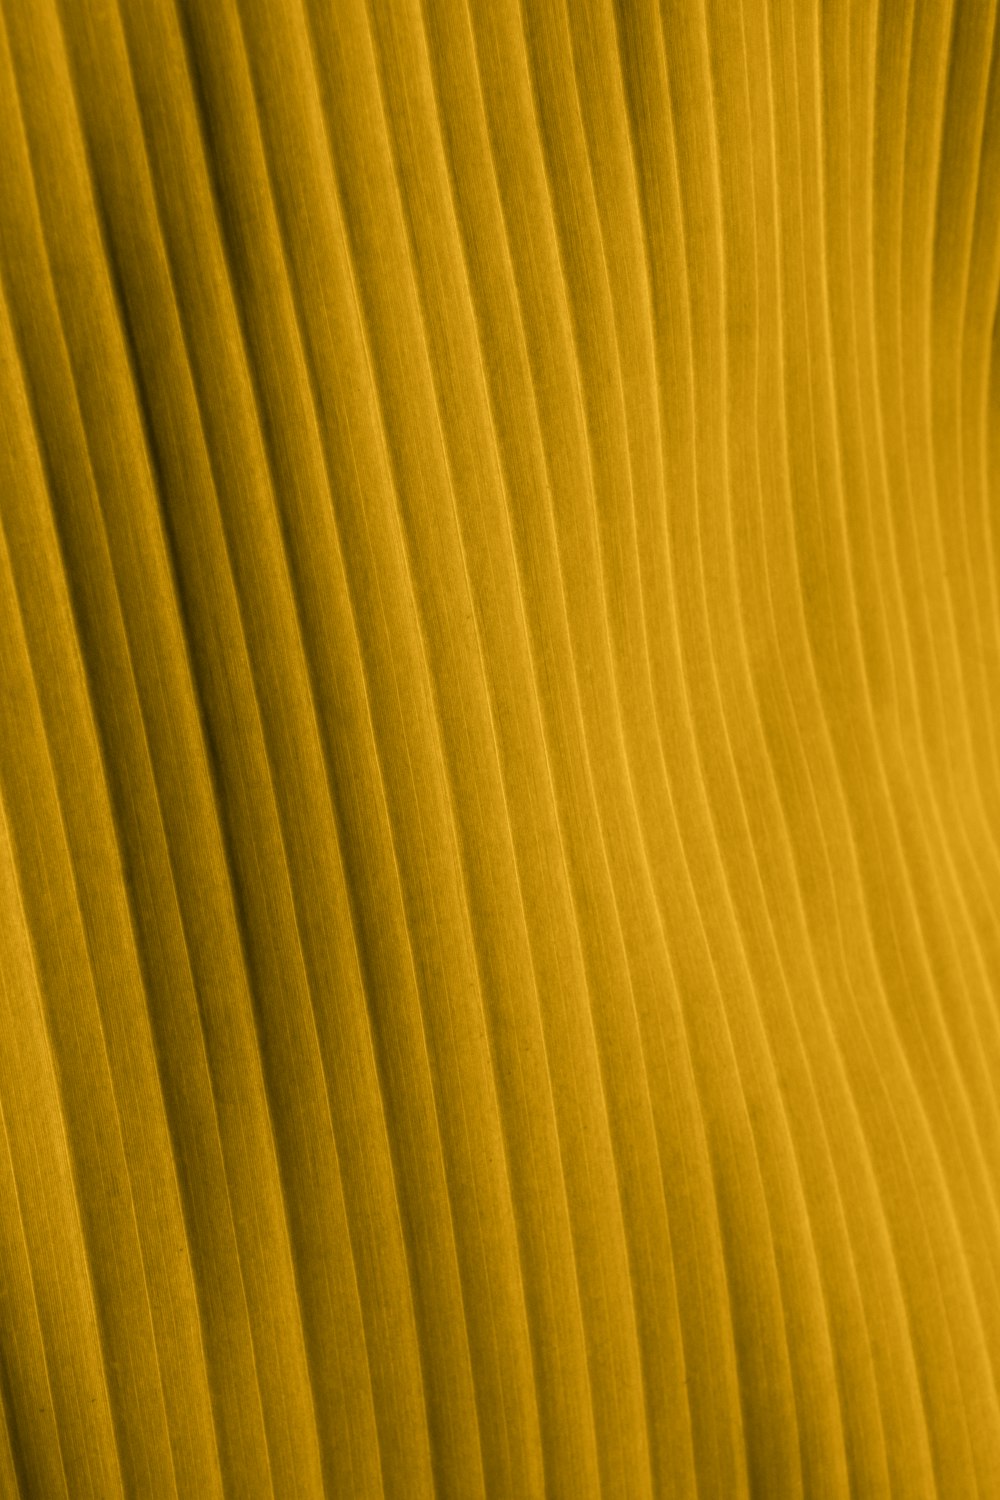 yellow and white striped textile